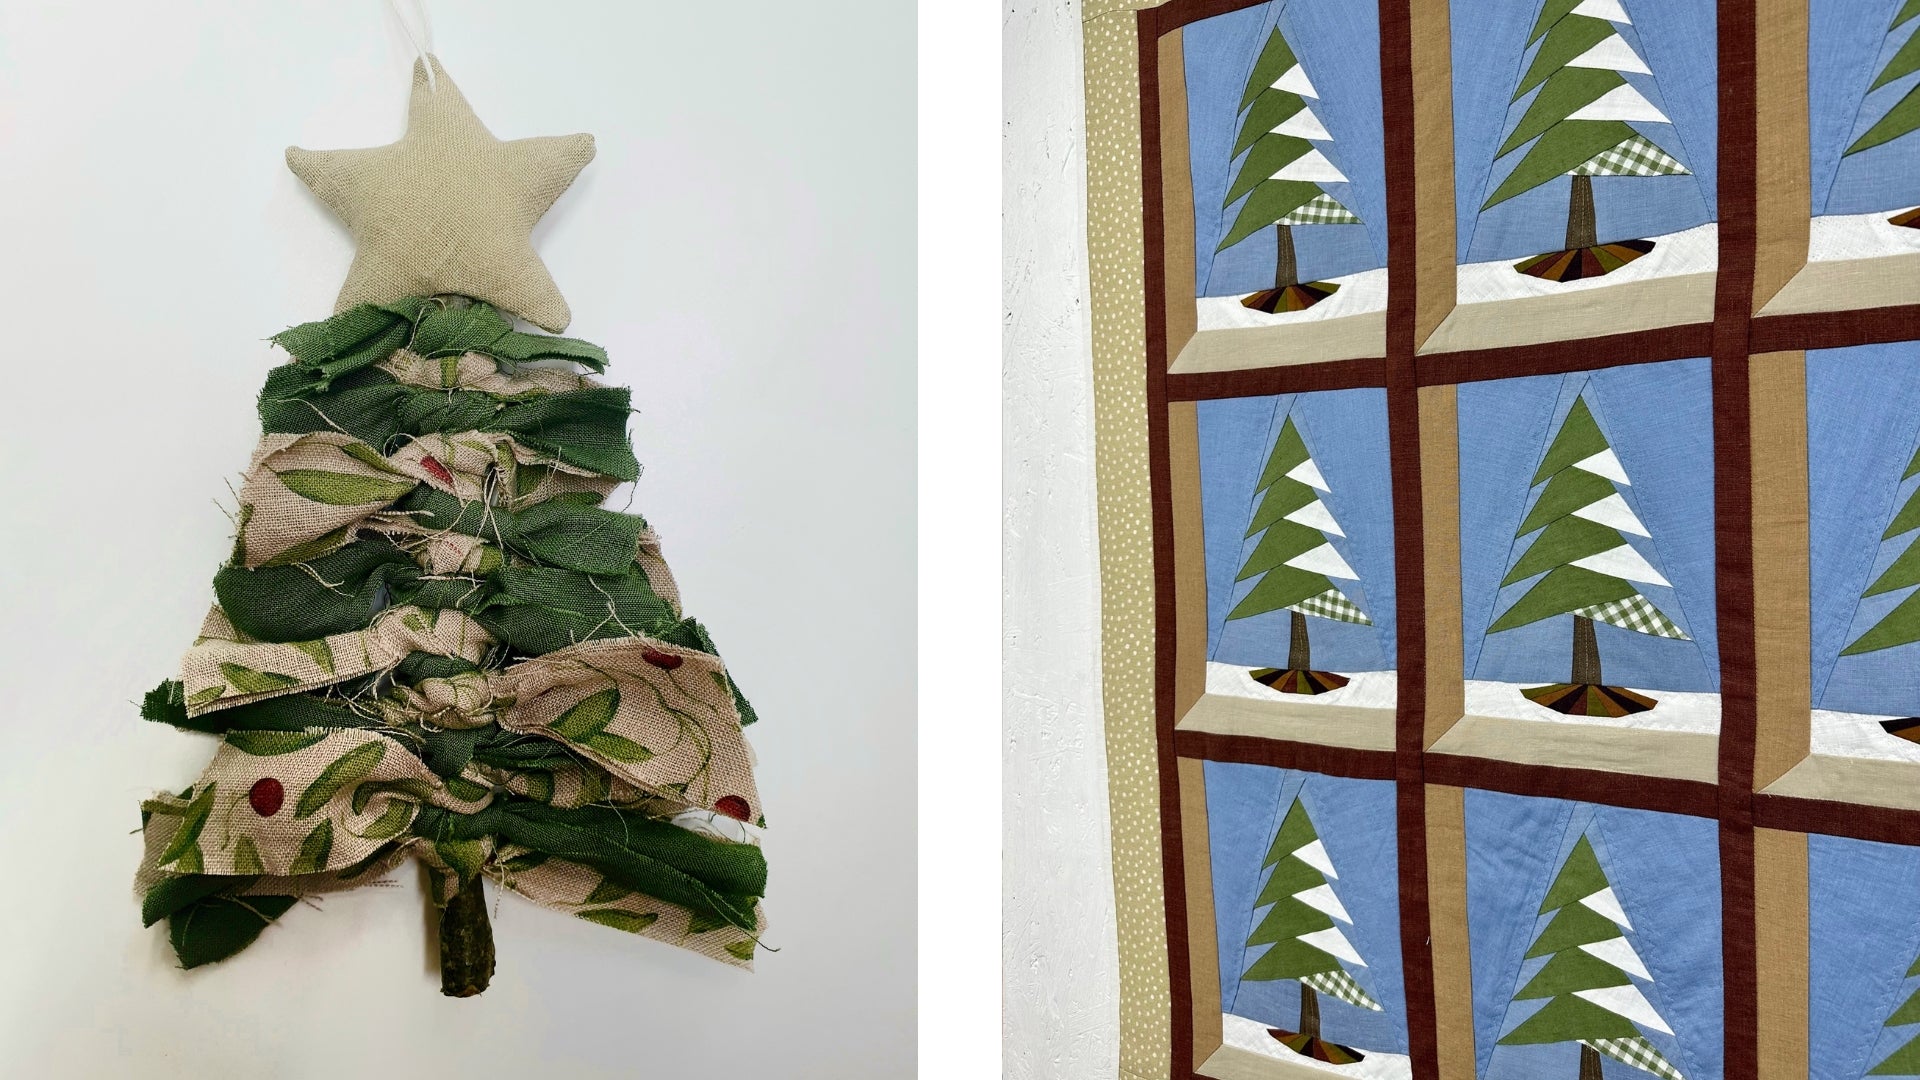 MagicLinen's Zero-Waste Christmas Decorations